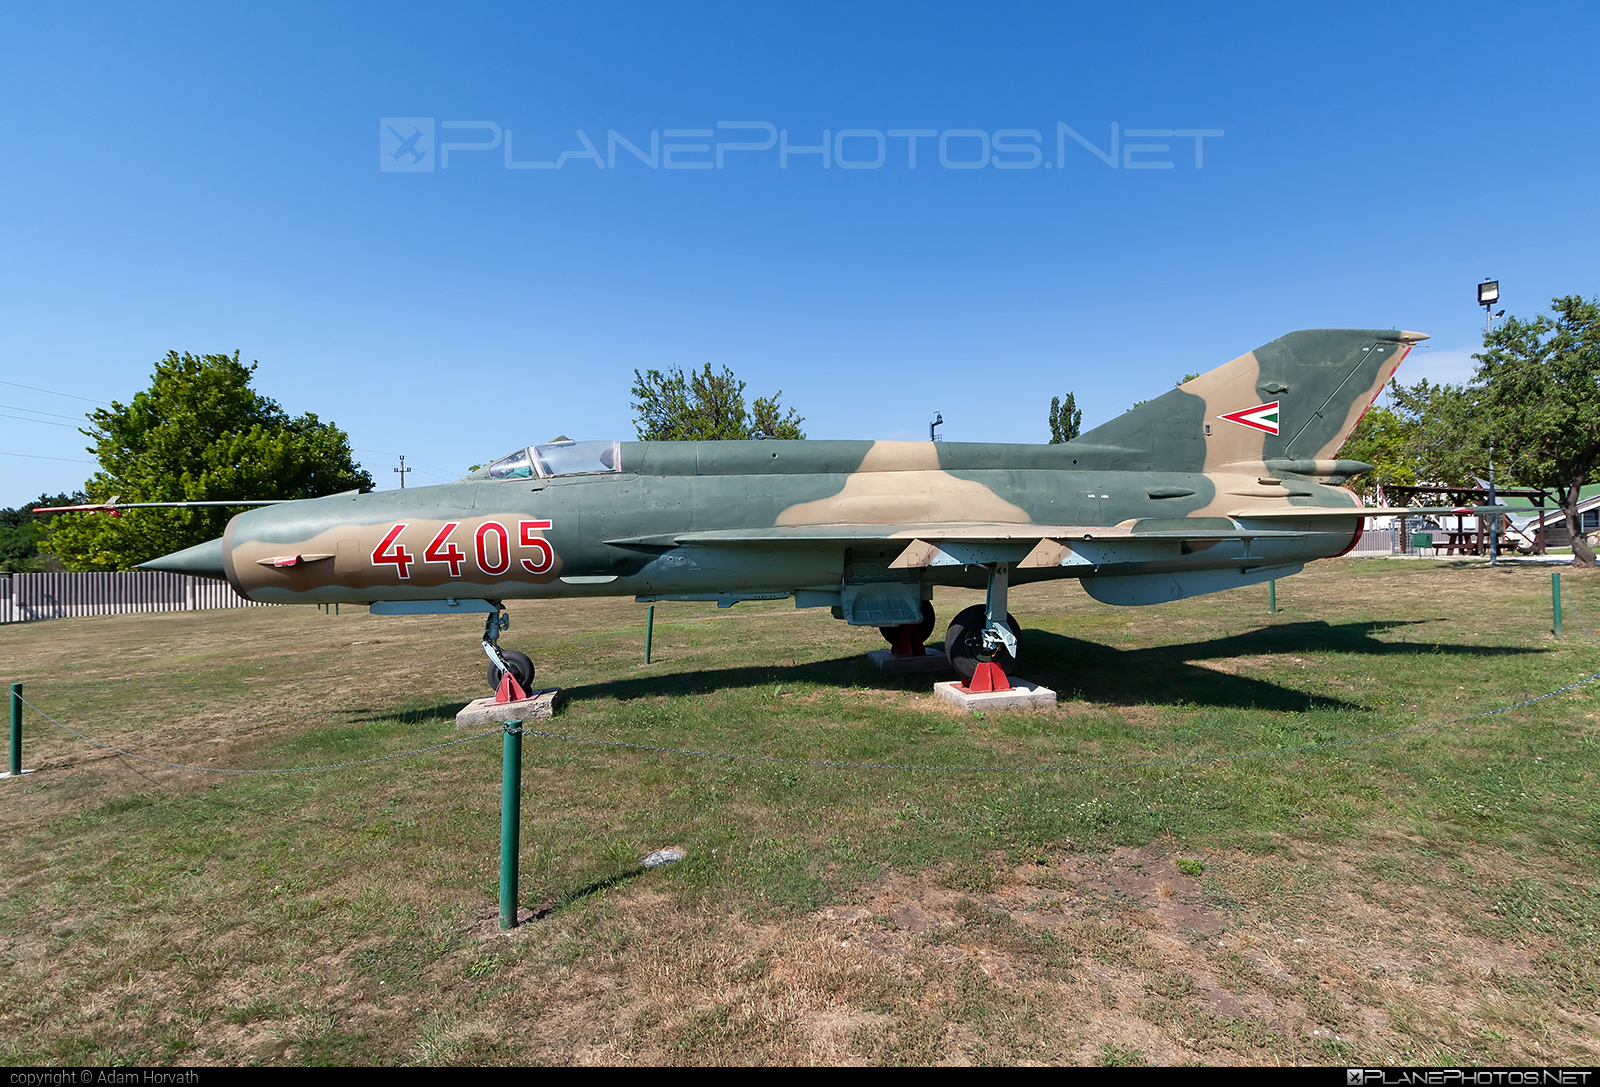 Mikoyan-Gurevich MiG-21MF - 4405 operated by Magyar Légierő (Hungarian Air Force) #hungarianairforce #magyarlegiero #mig #mig21 #mig21mf #mikoyangurevich